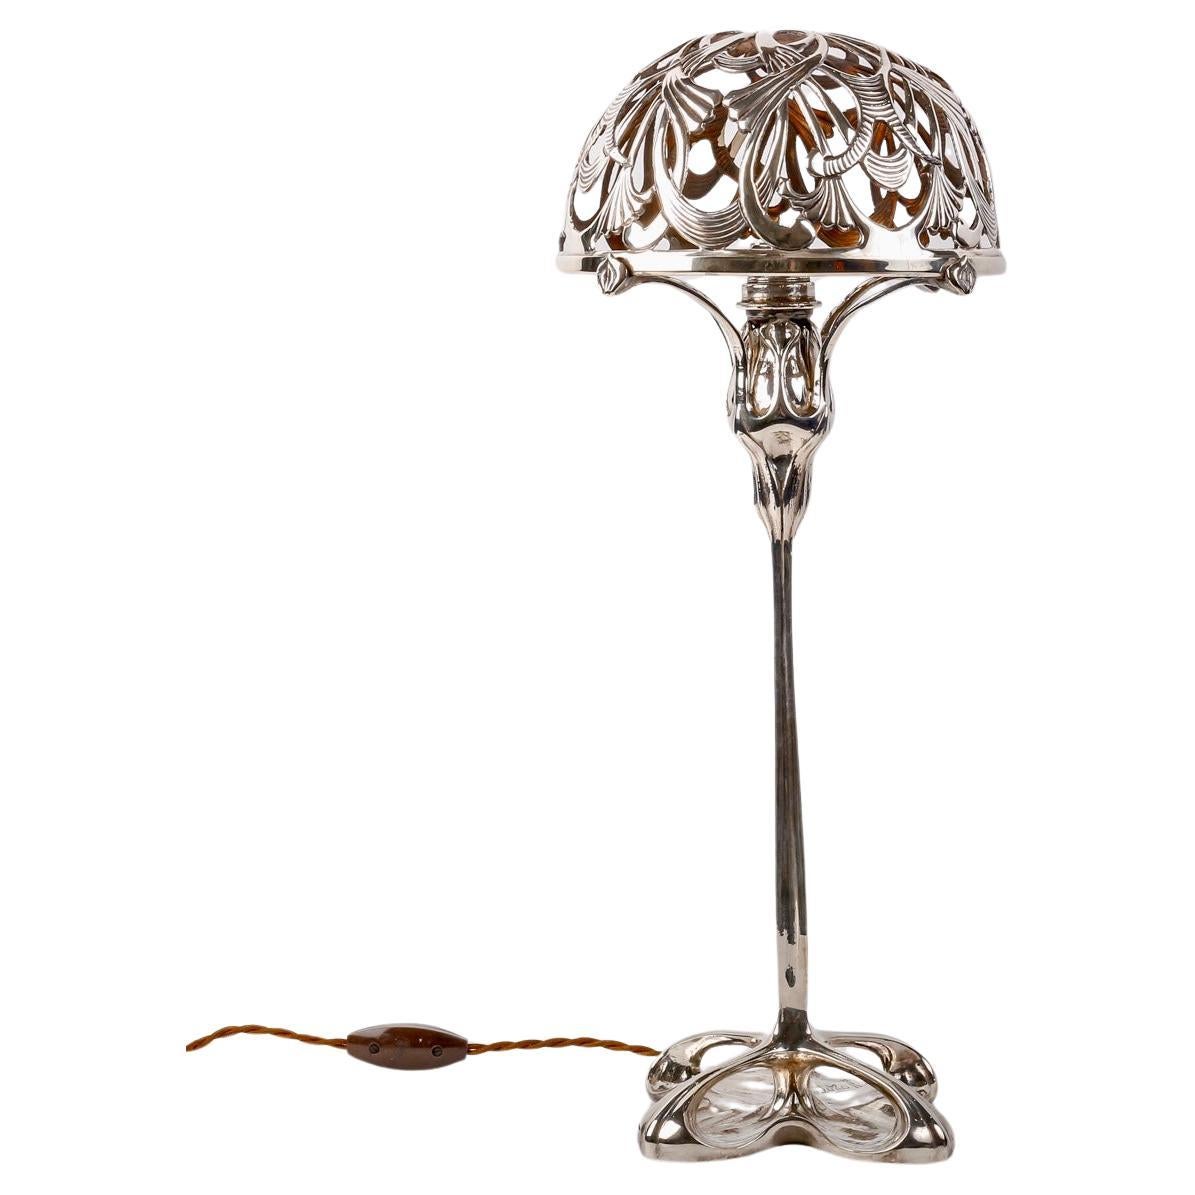 1904 Paul Follot - Lamp Foliage  Silvered Bronze  For La Maison Moderne For Sale